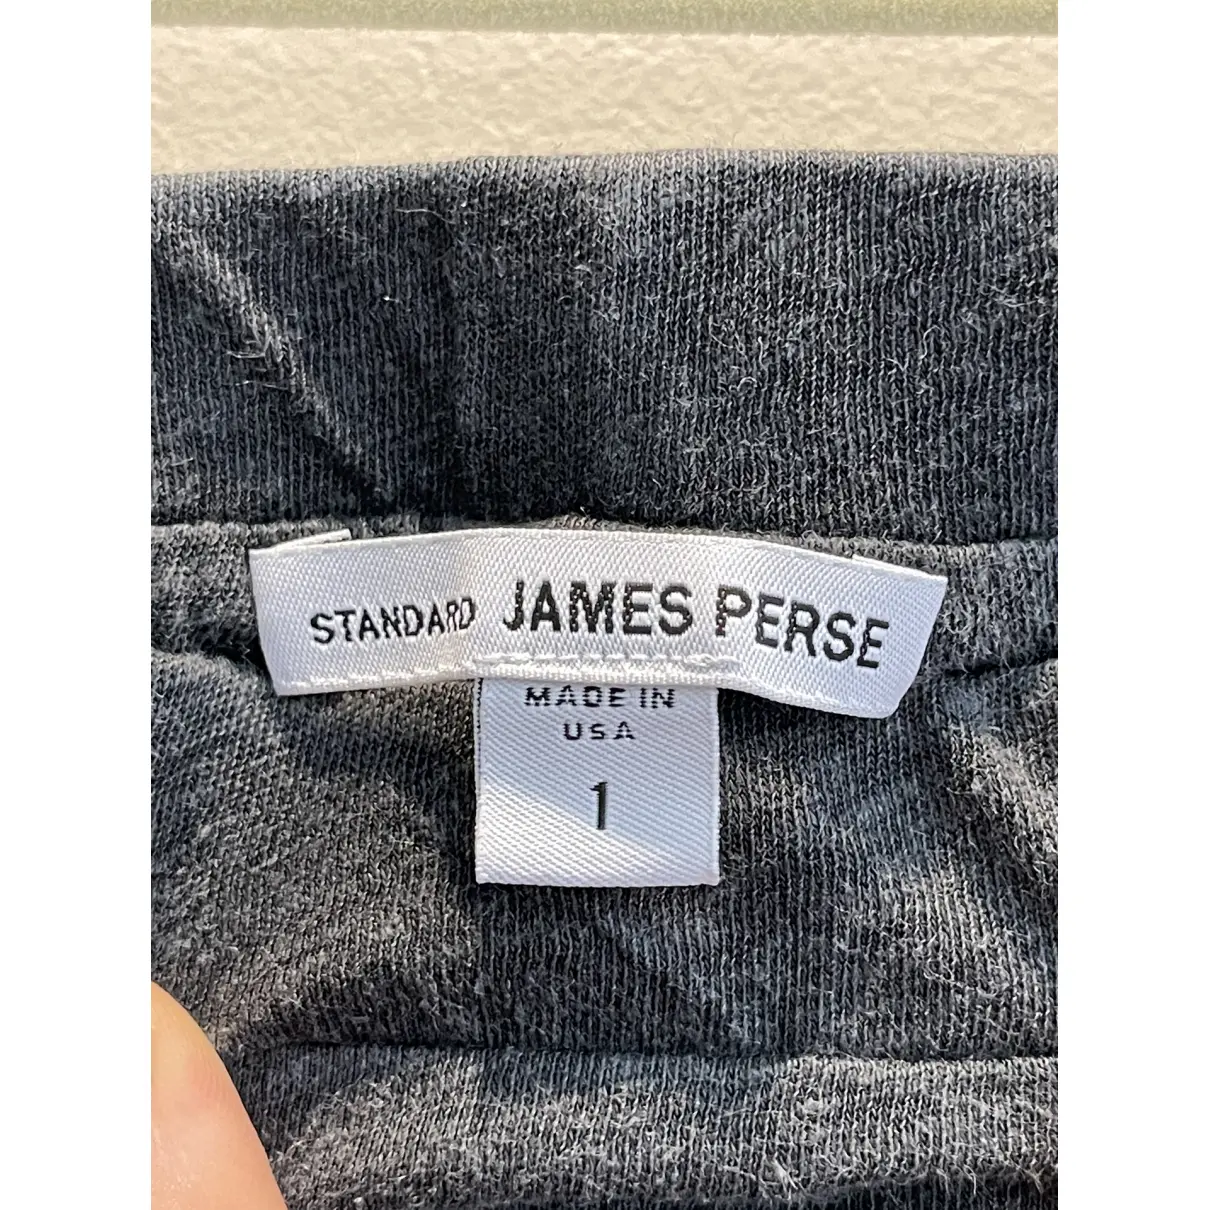 Buy James Perse Maxi skirt online